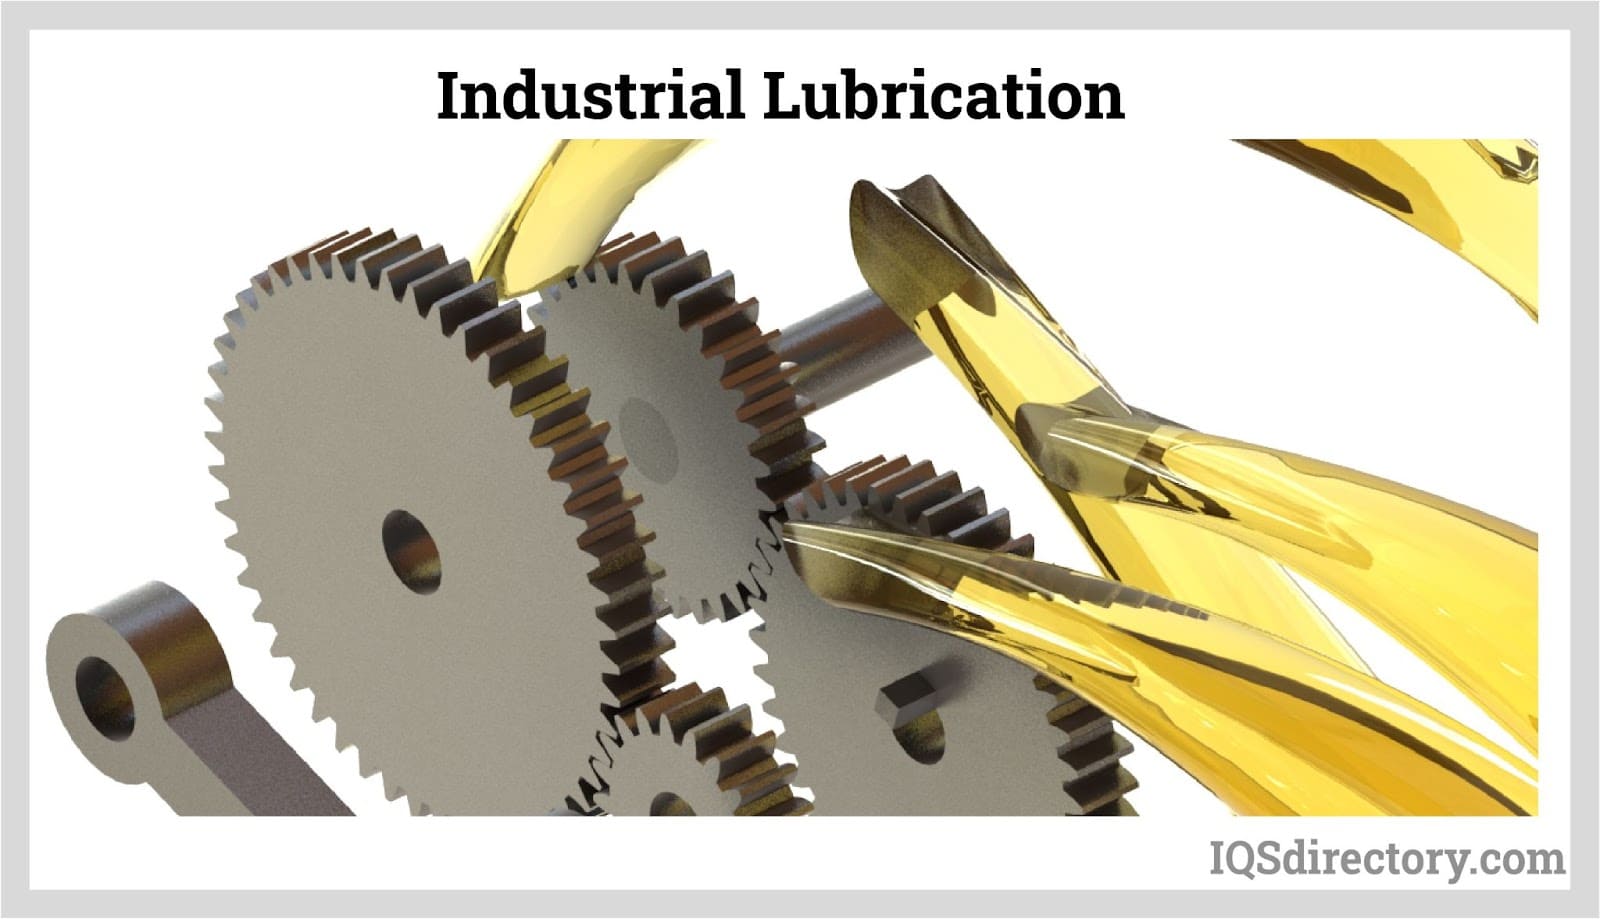 Industrial Lubrication